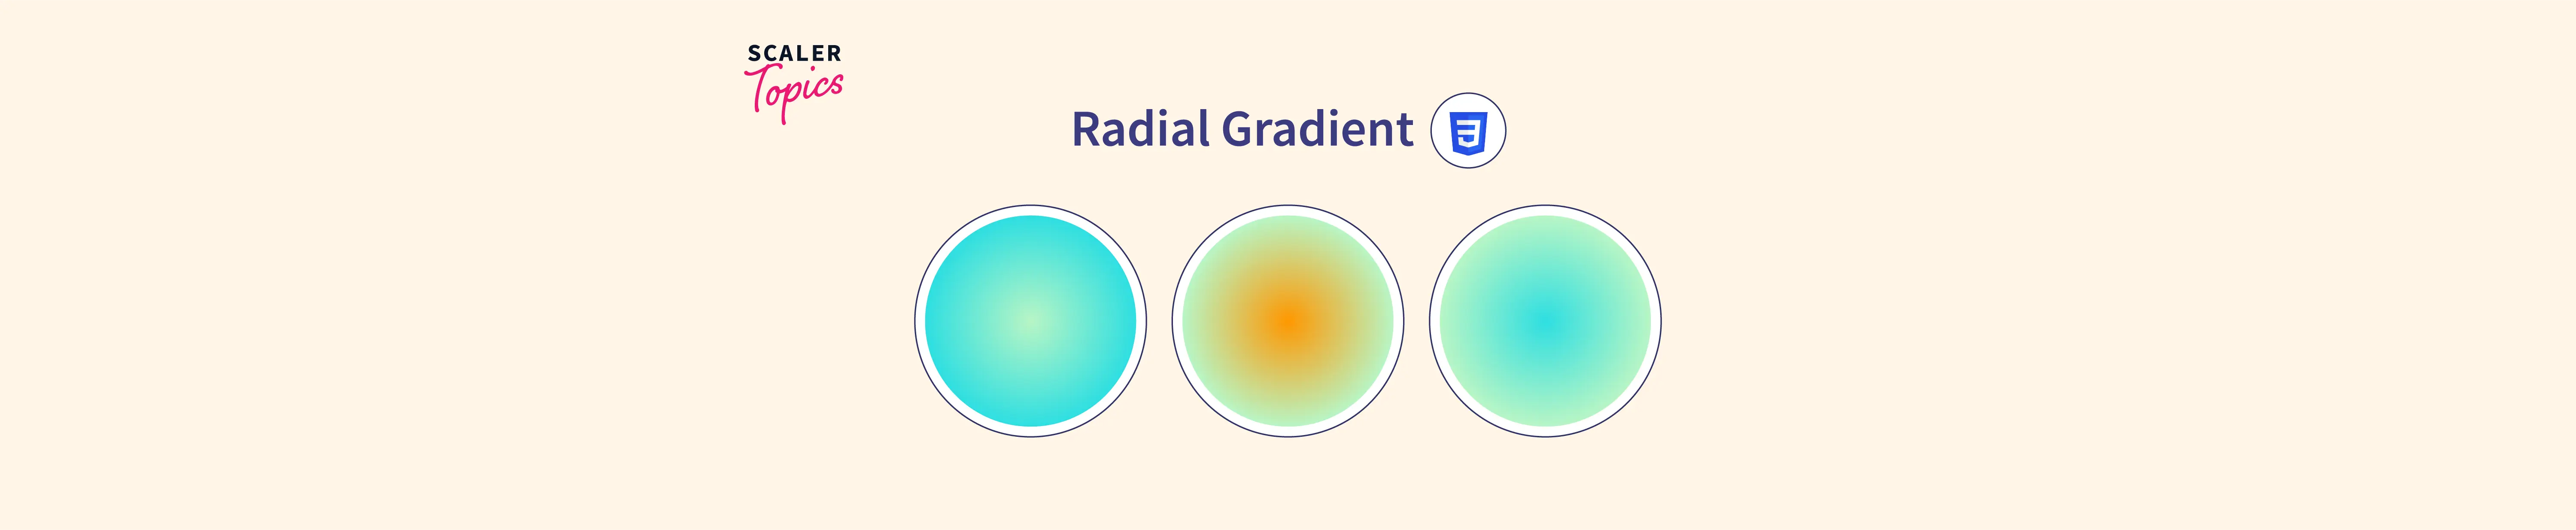 Radial Gradient Css.webp